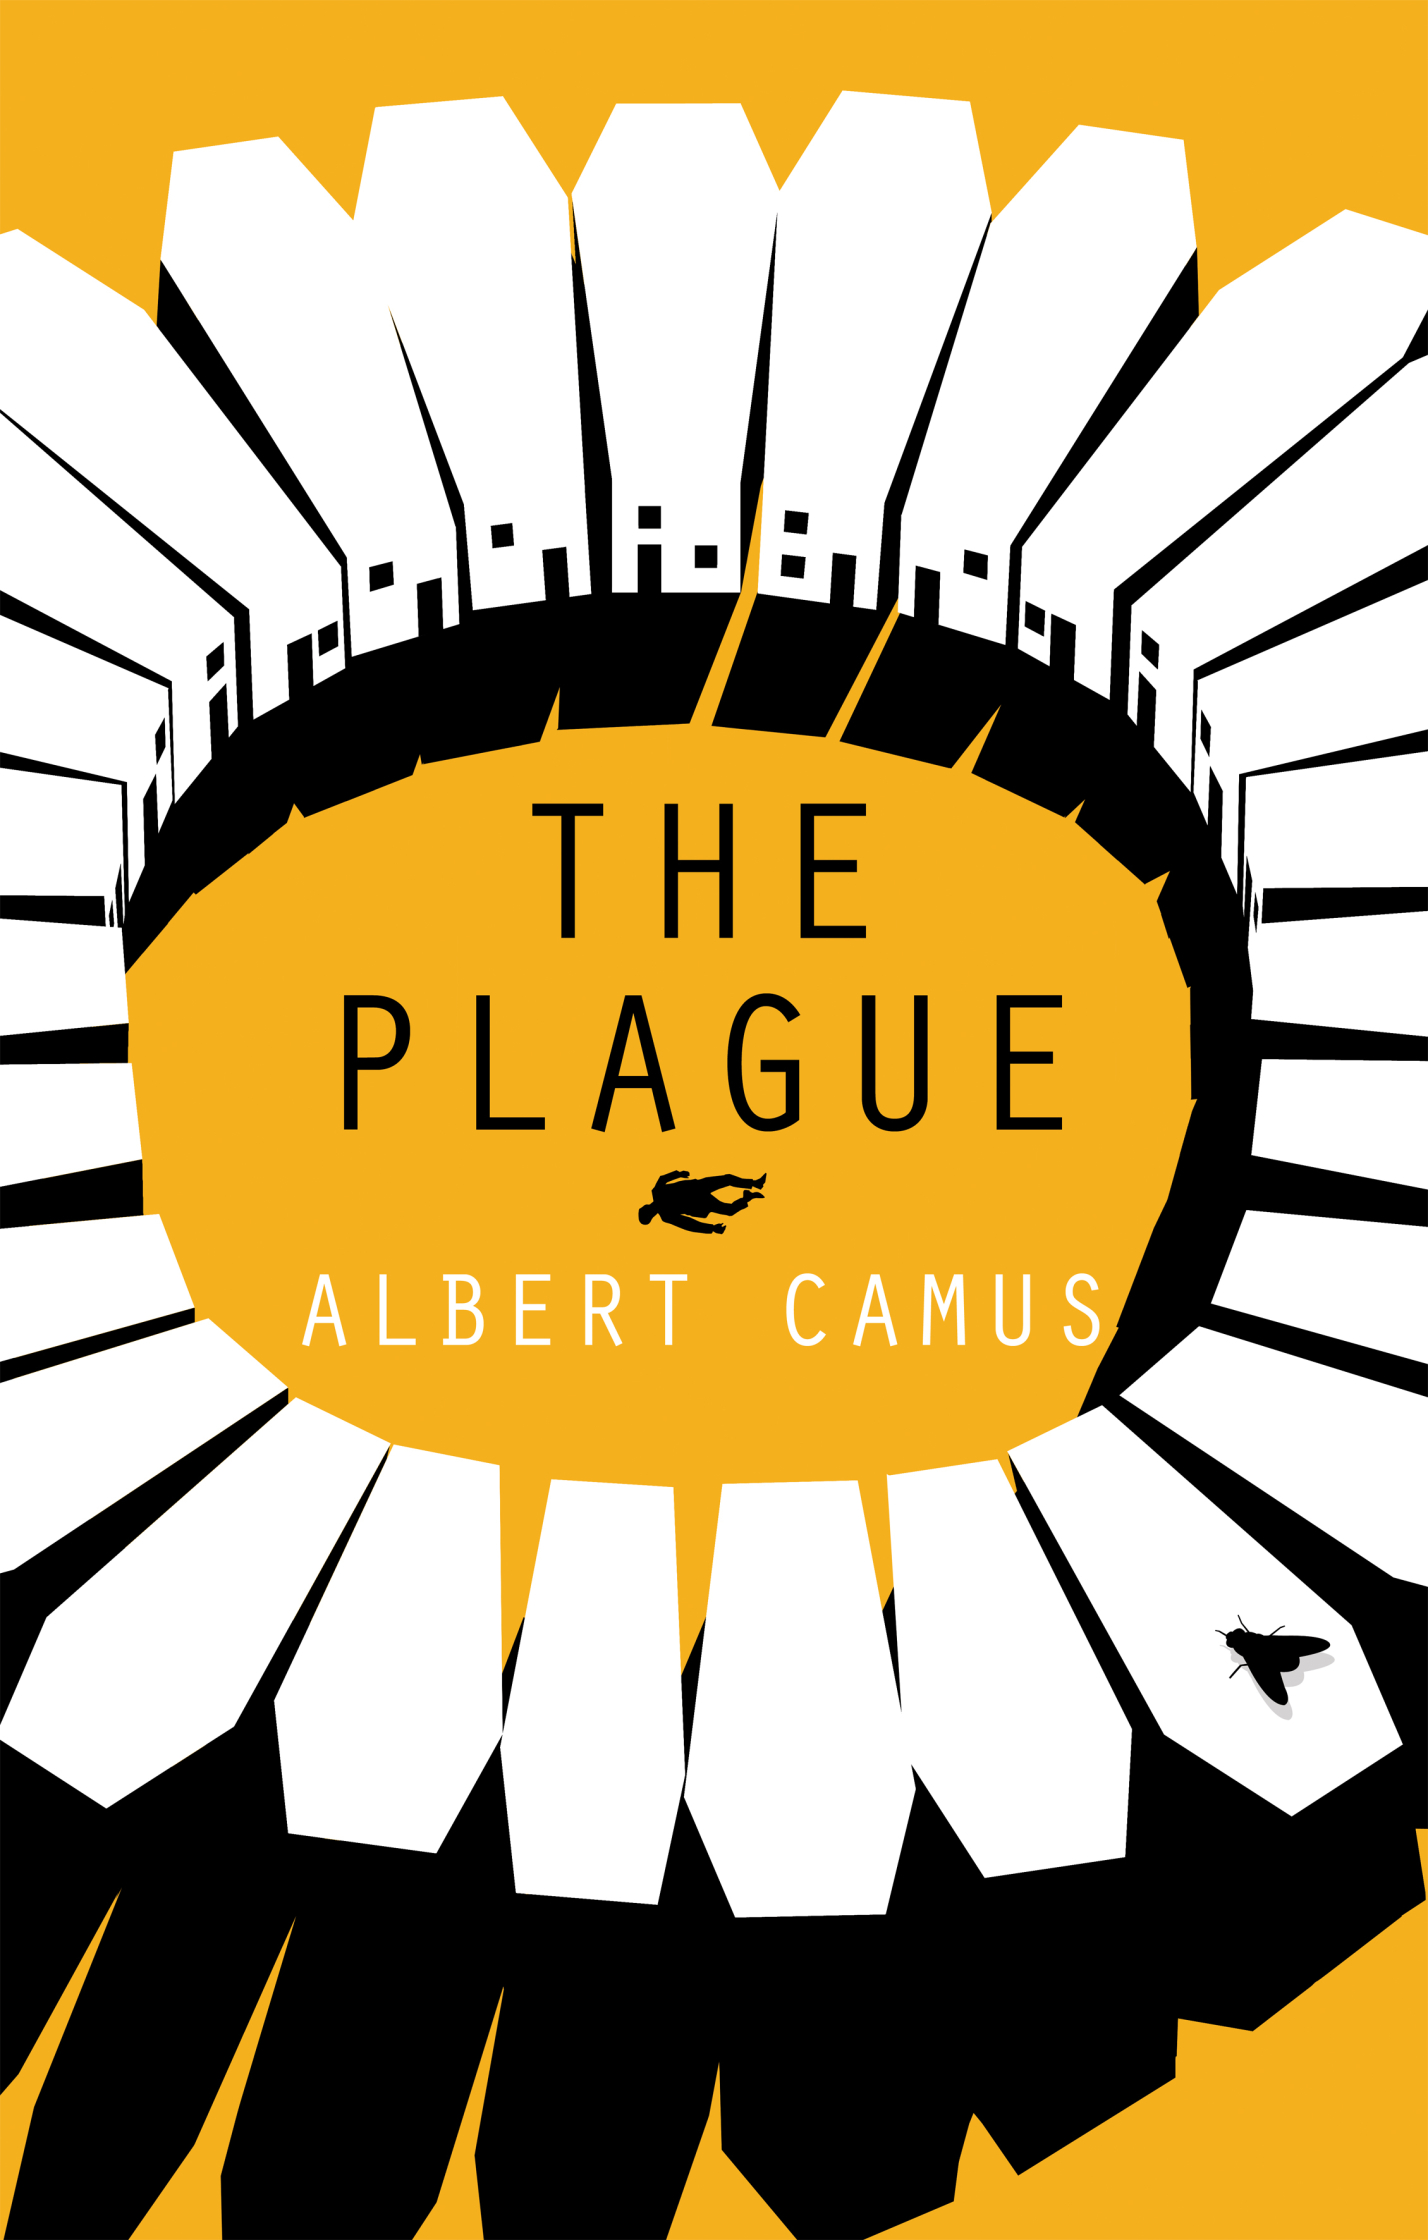 camus albert the plague